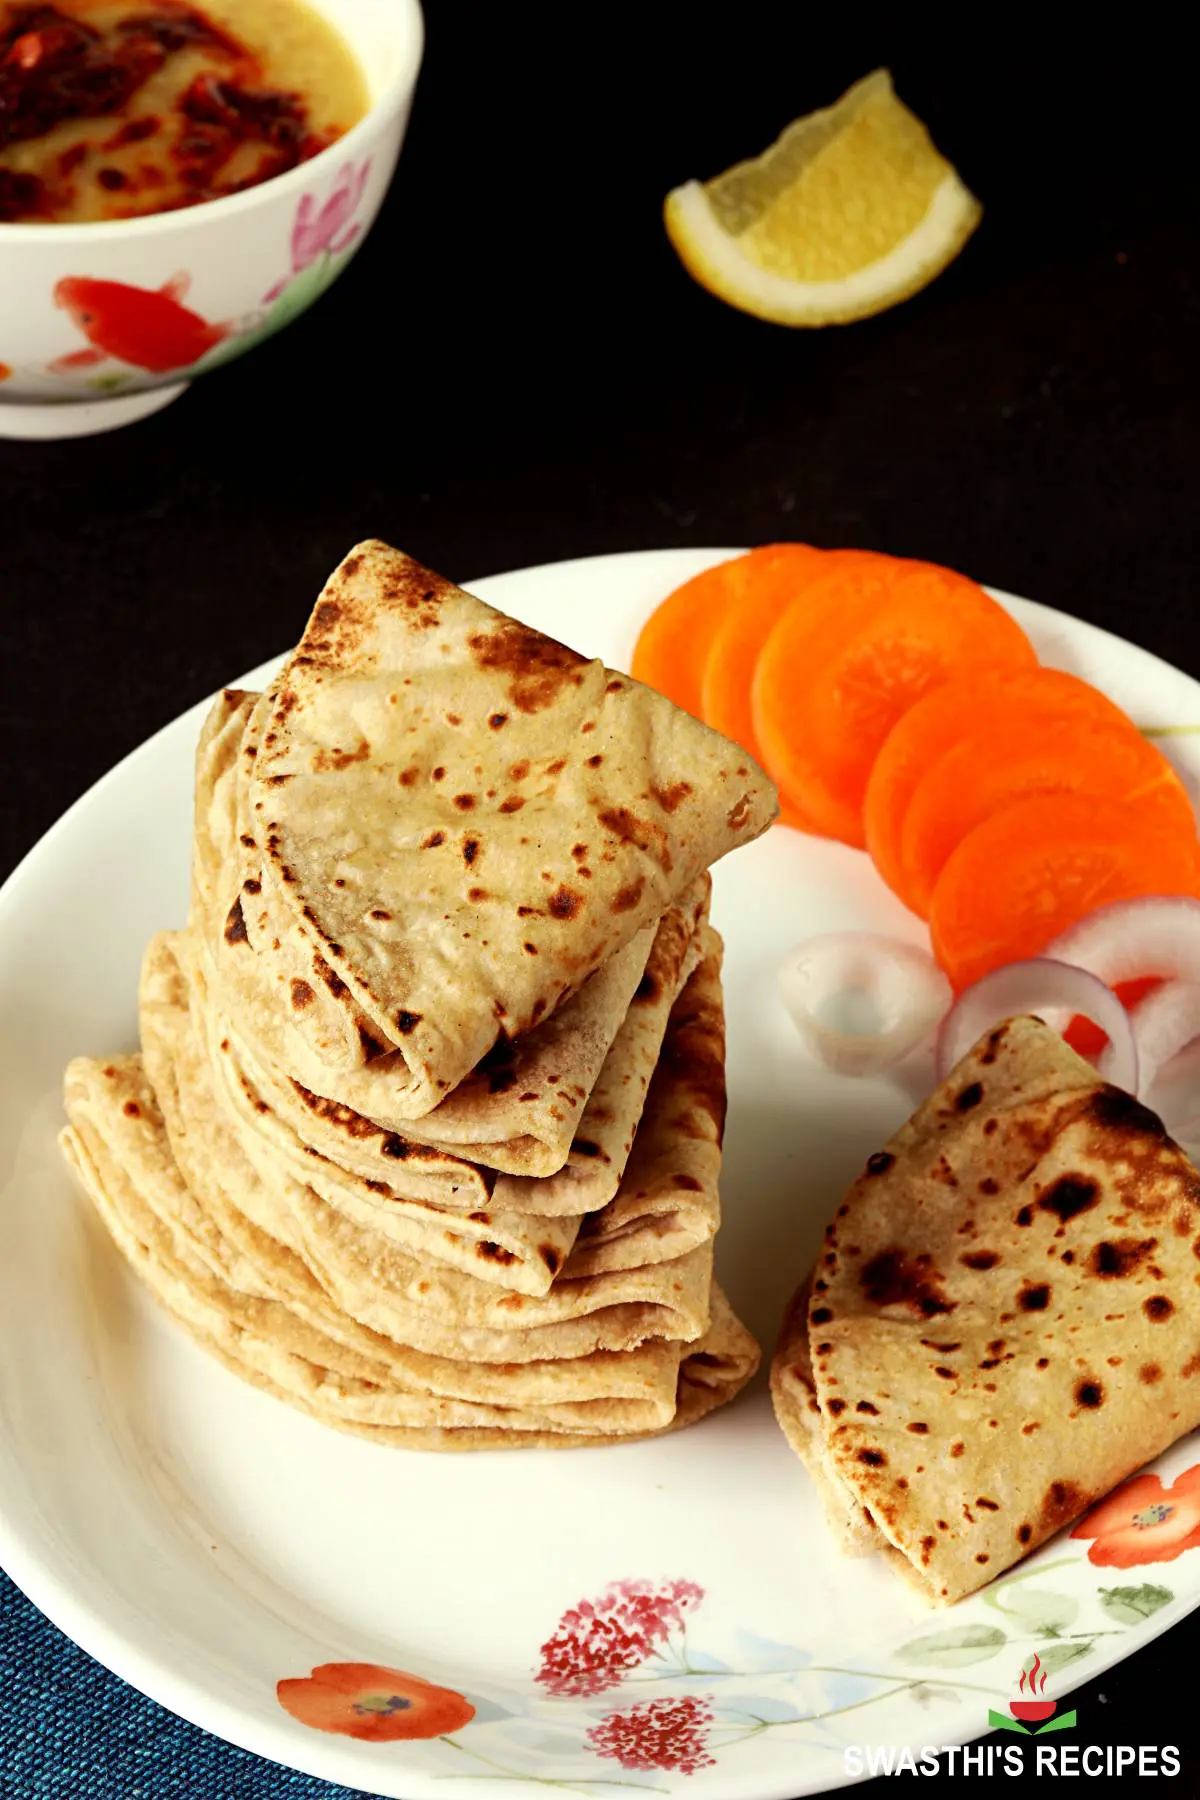 Chapati Recipe (Indian Flatbread) - Swasthi's Recipes